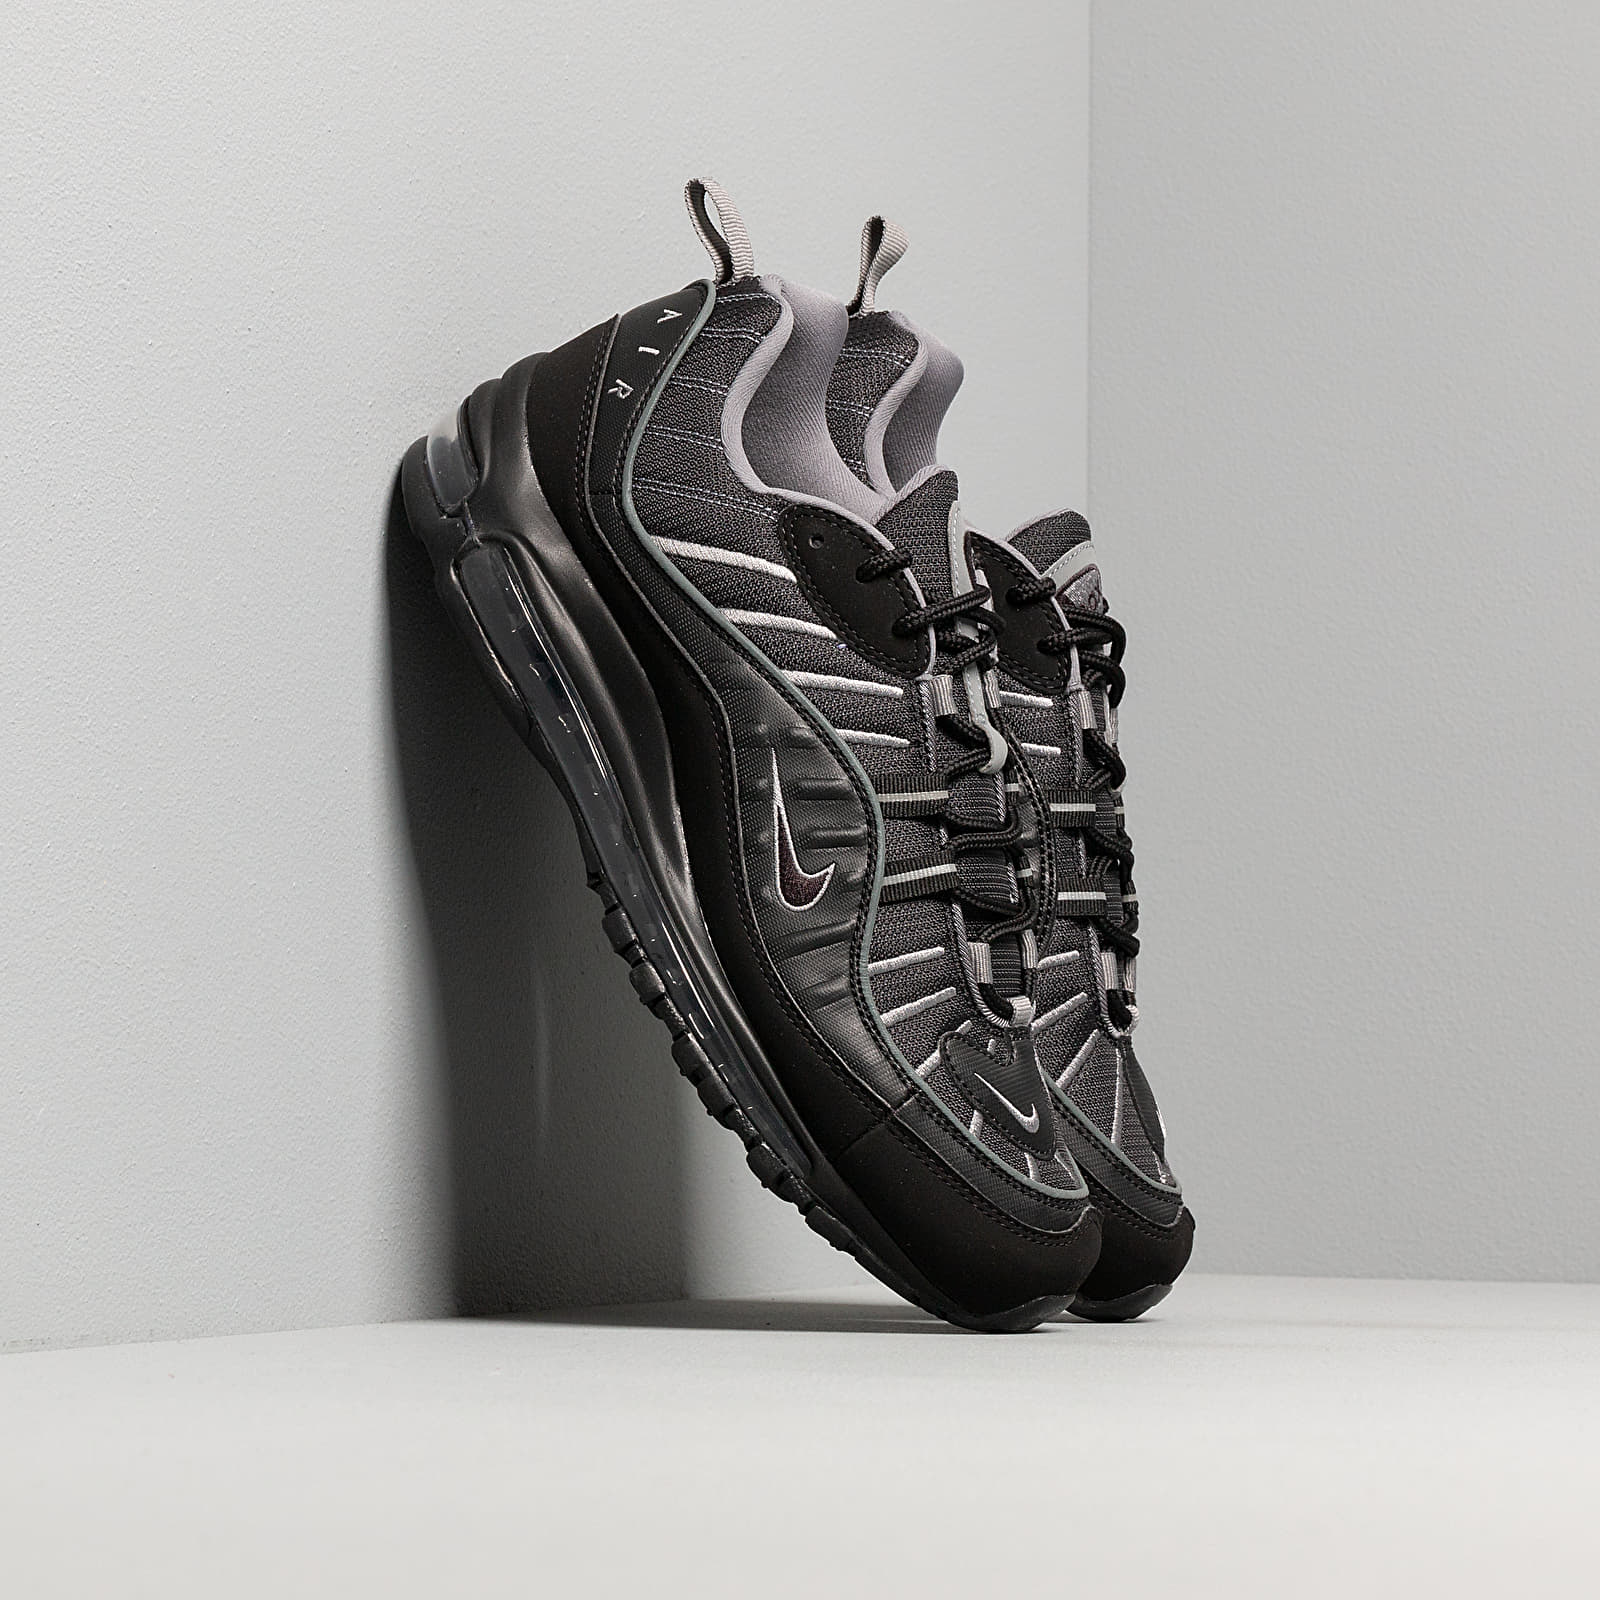 Chaussures et baskets homme Nike Air Max 98 Black/ Black-Smoke Grey-Vast Grey